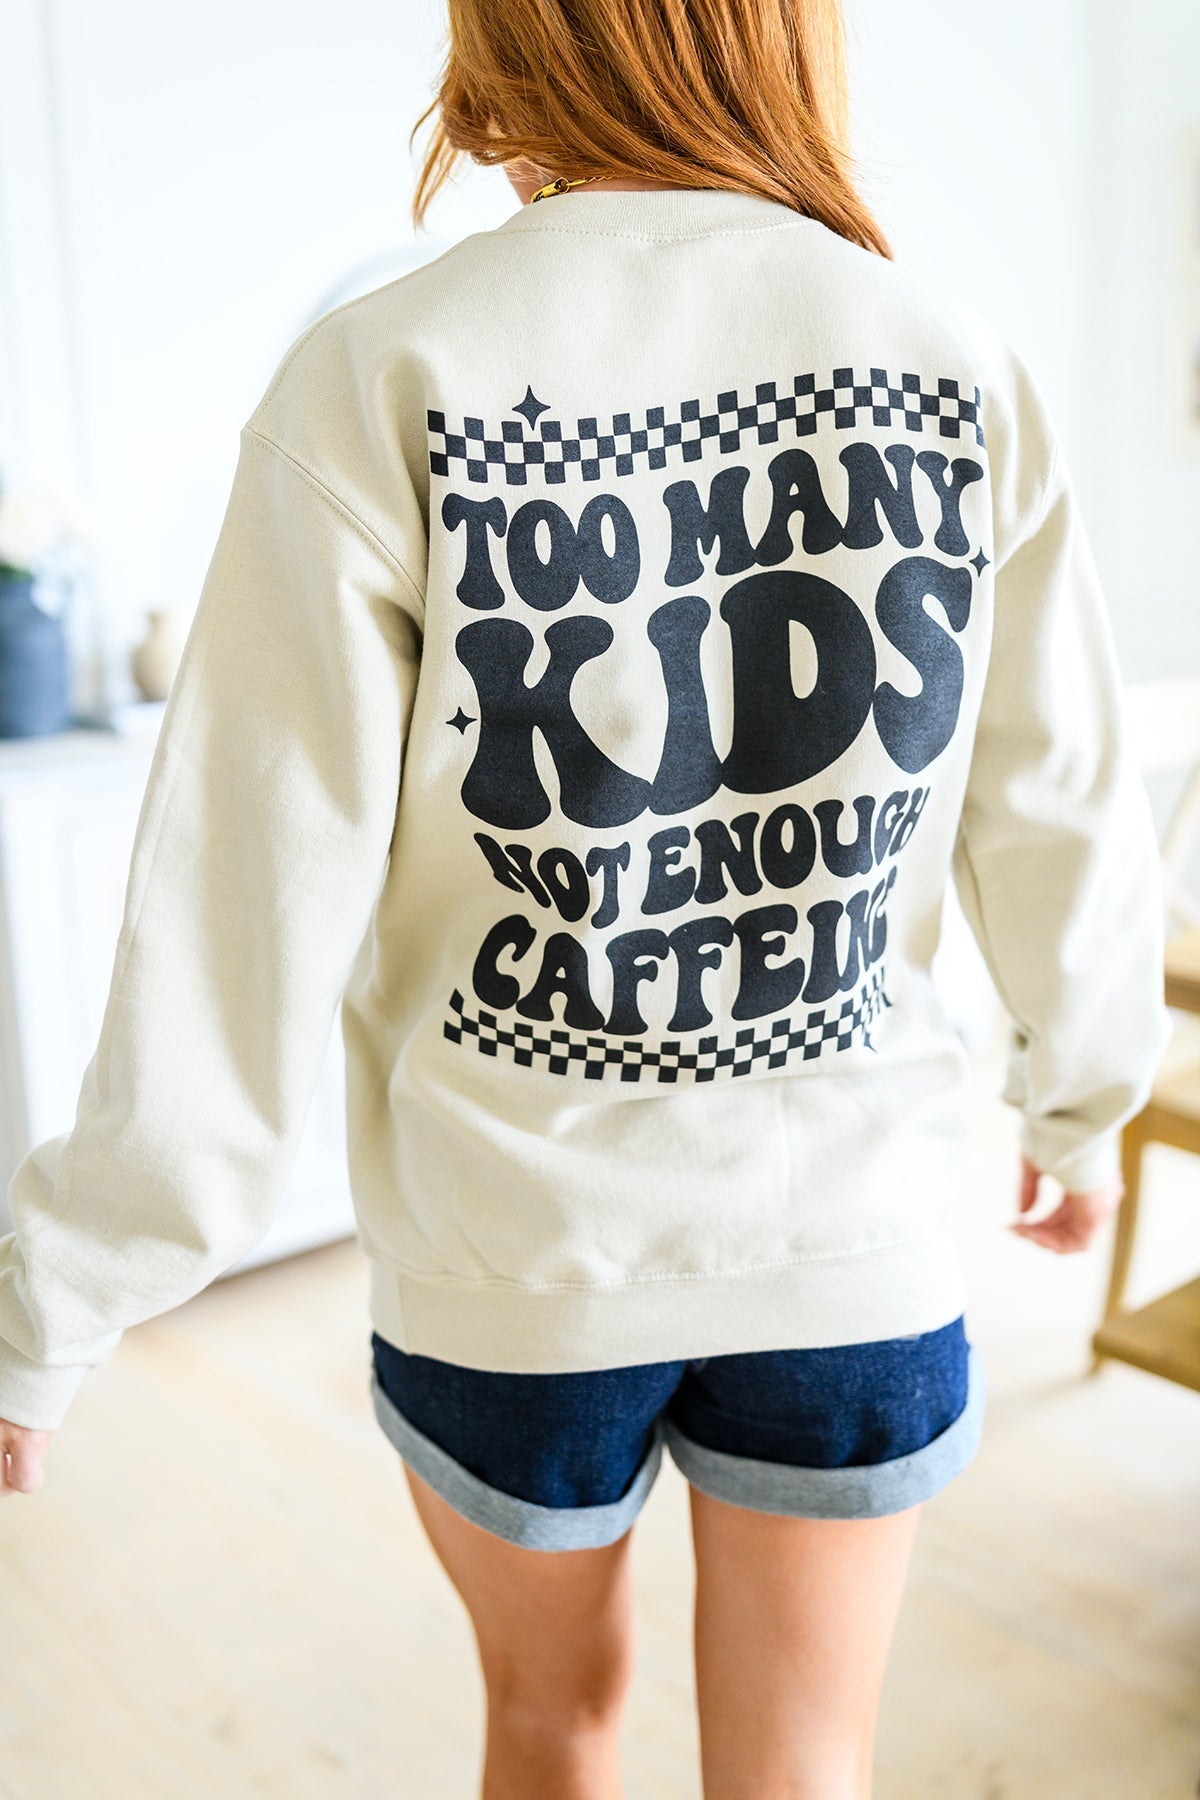 Too Many Kids, Not Enough Caffeine Sweatshirt   